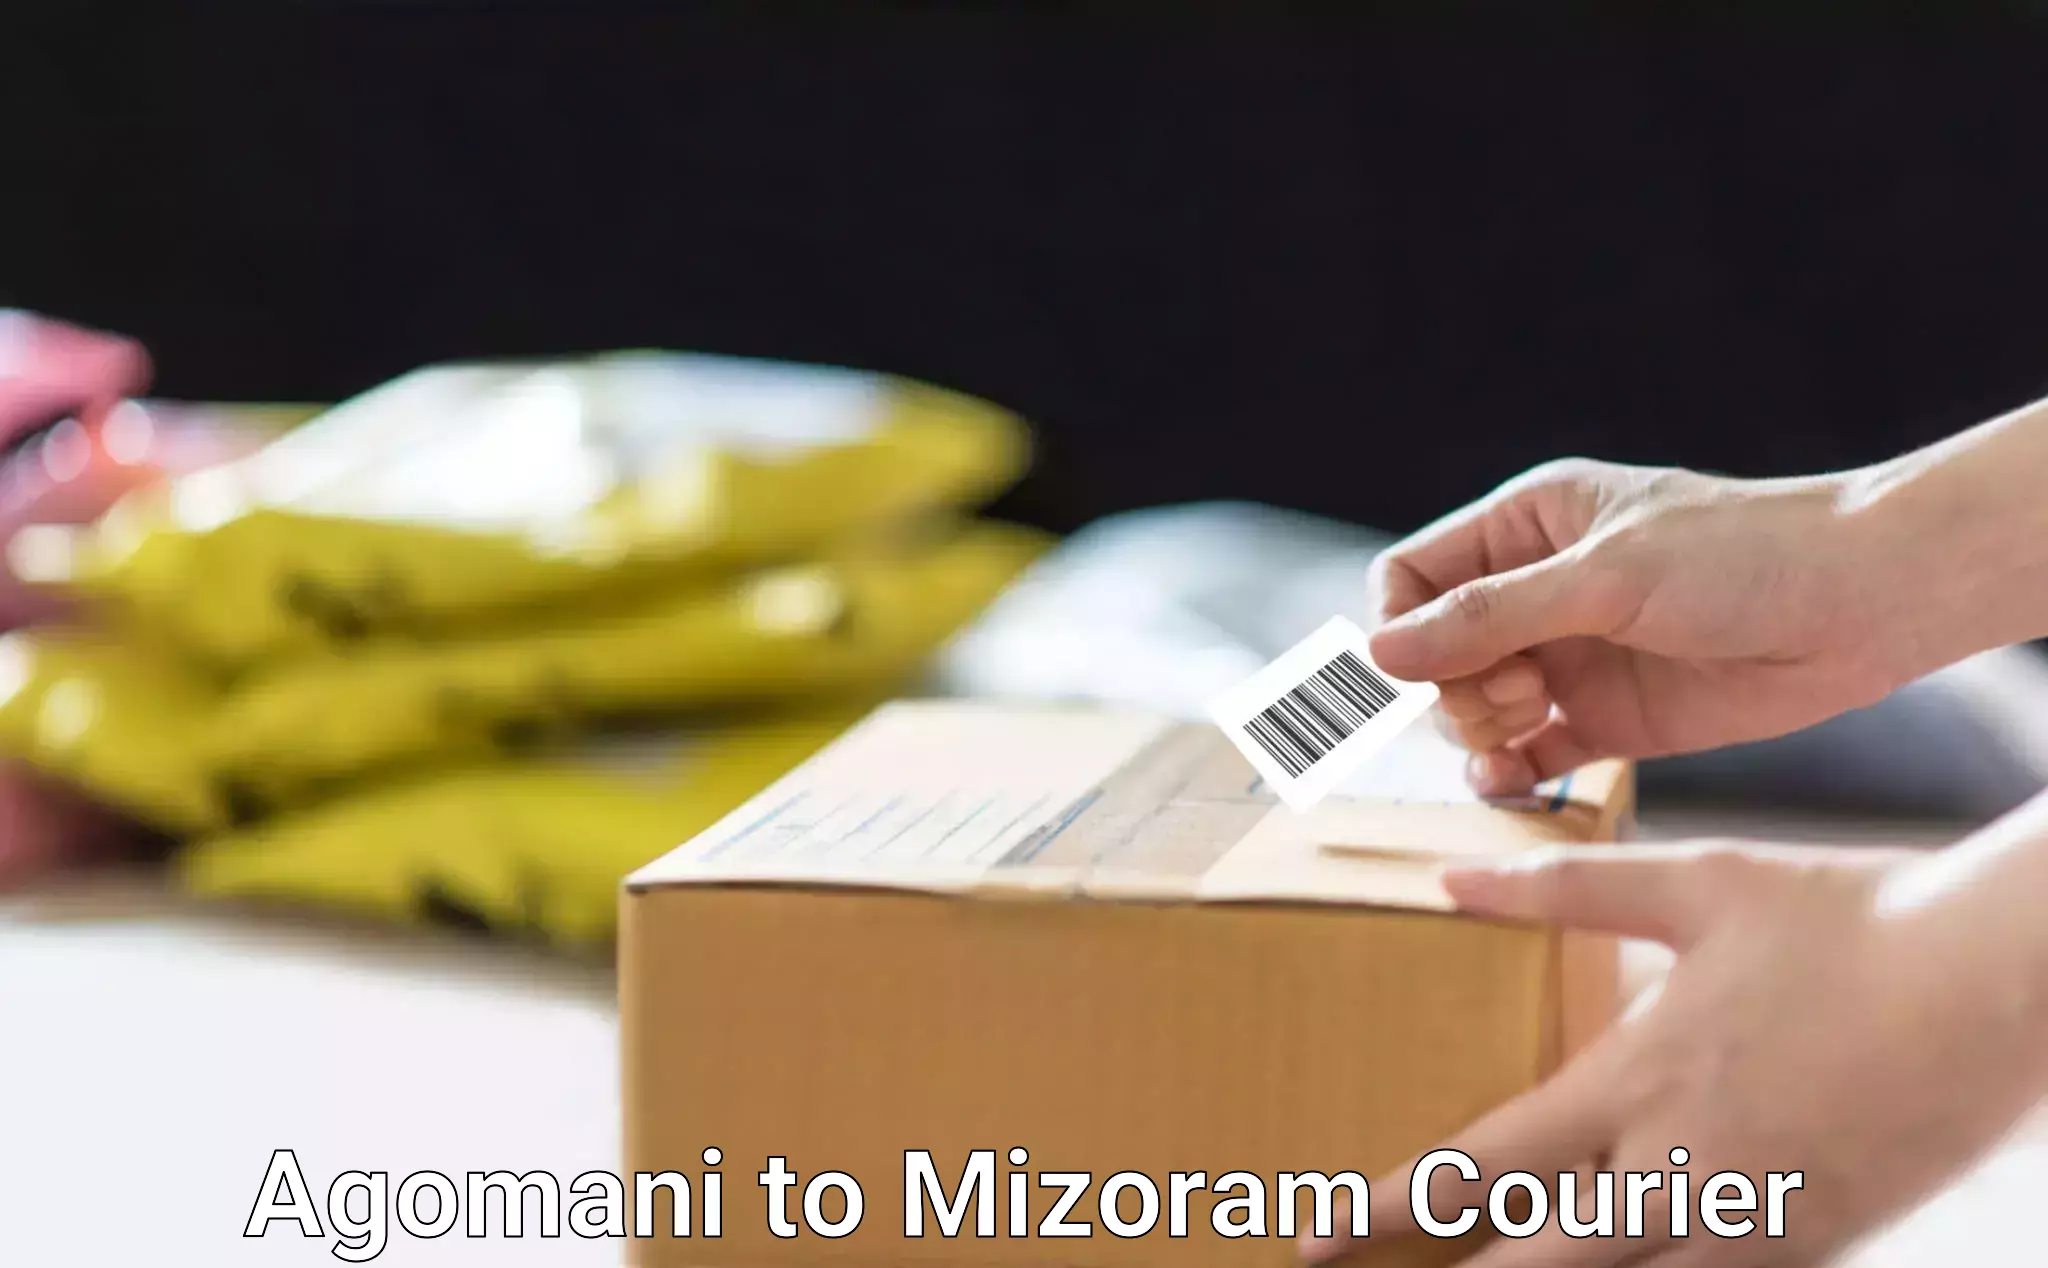 Global courier networks Agomani to Mizoram